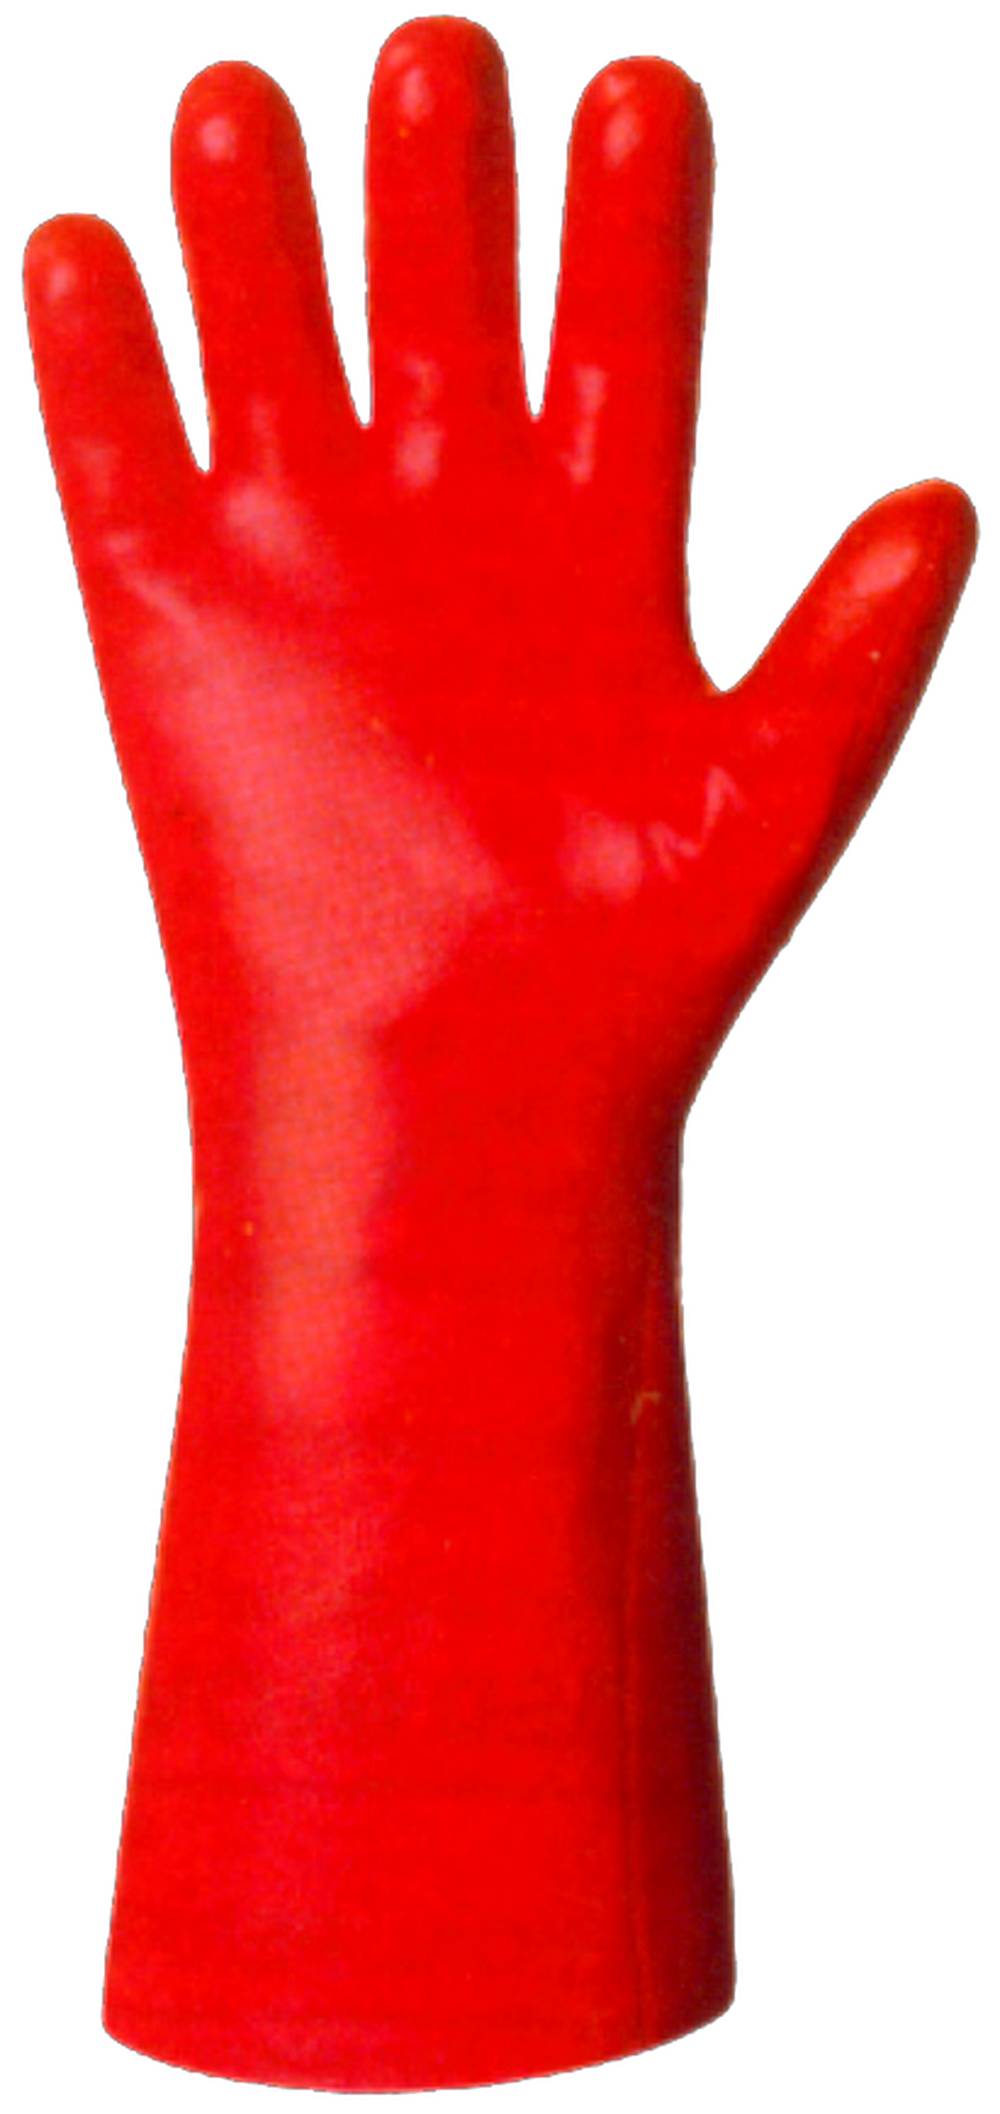 Polyvinyl Alcohol (PVA) Gloves: Research Safety - Northwestern